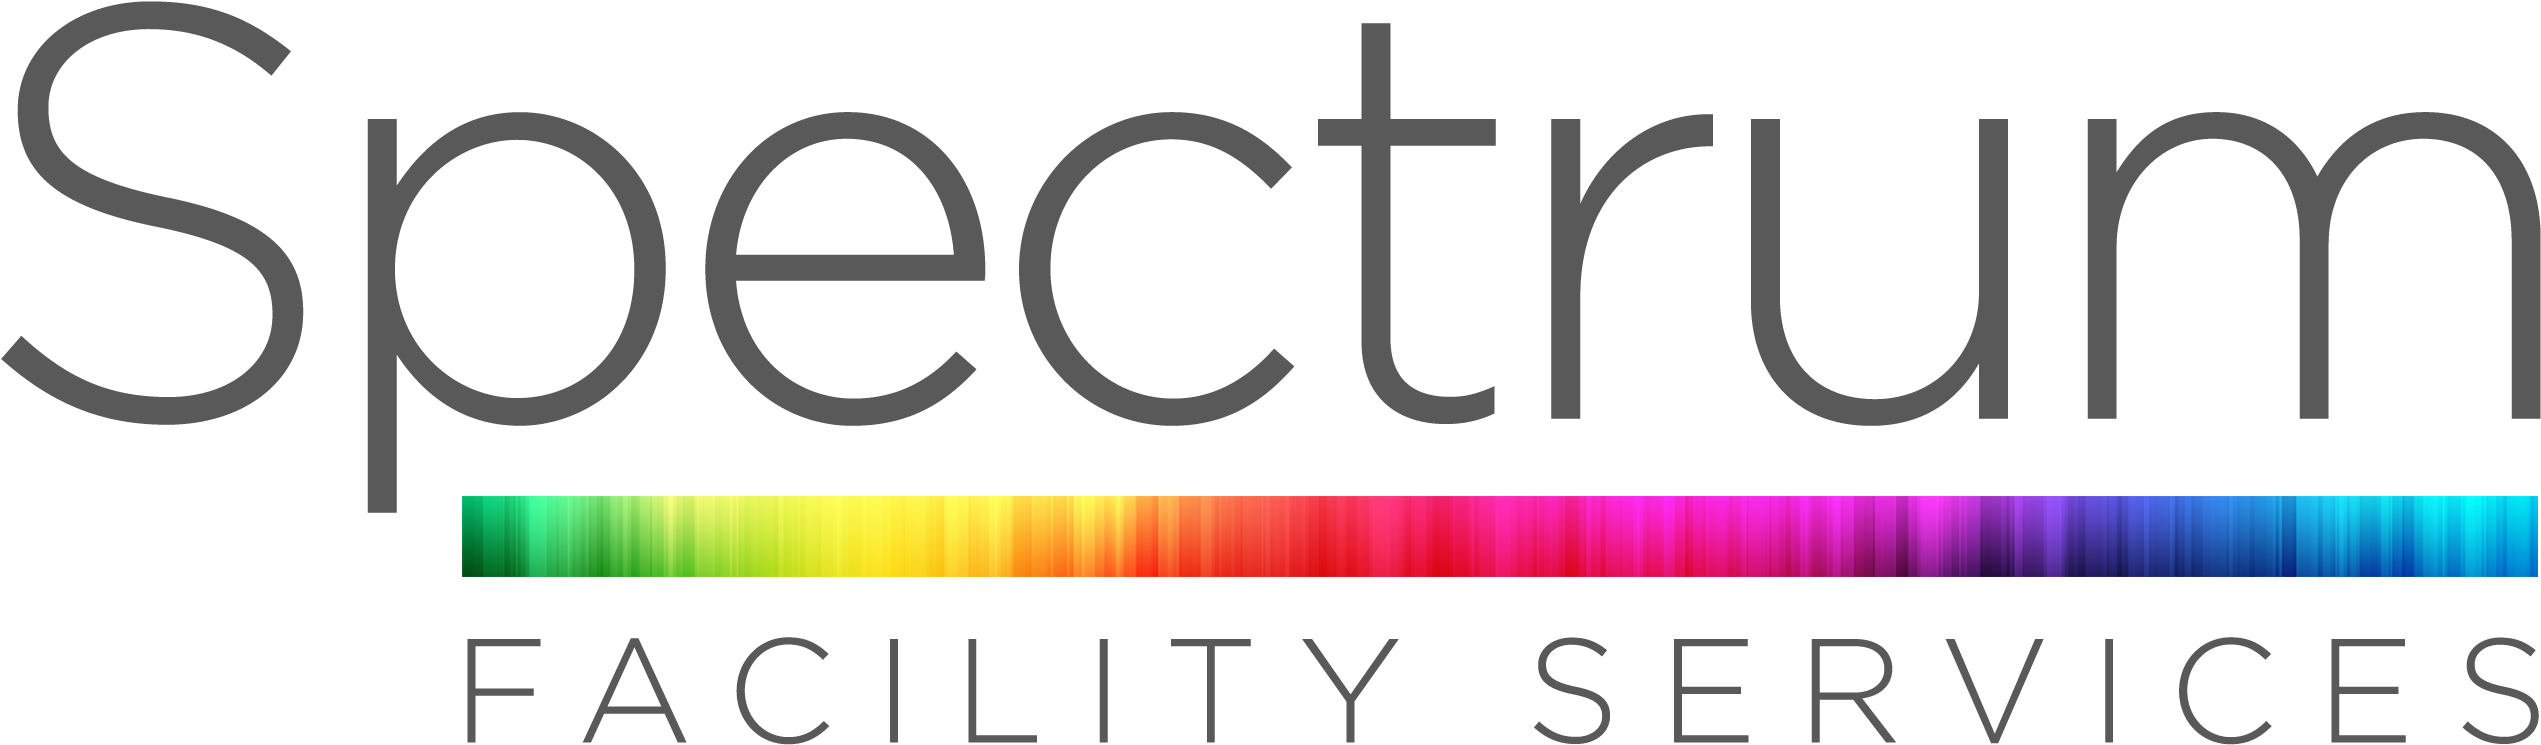 Spectrum Facility Services Logo PNG